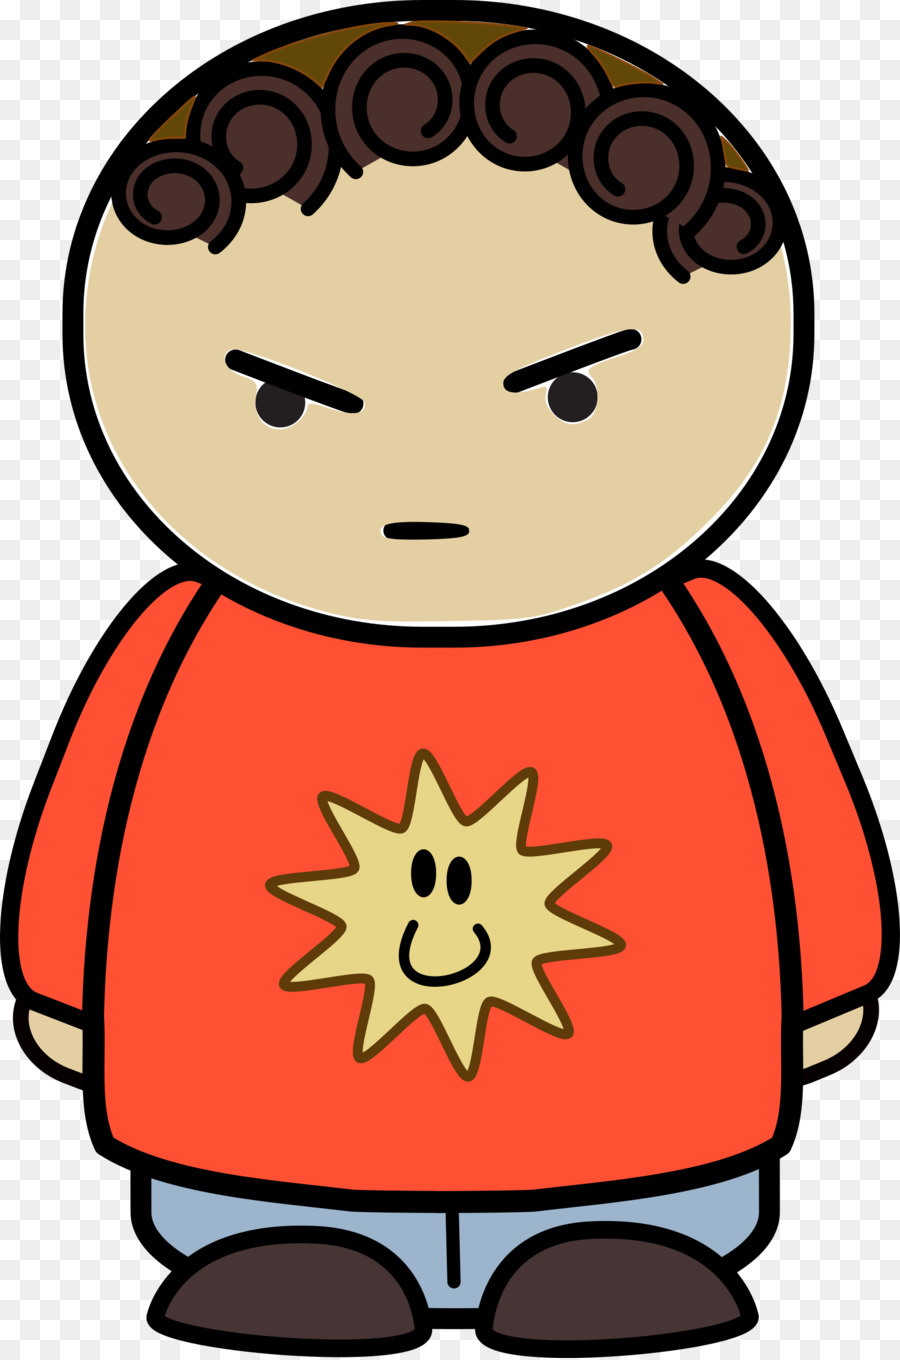 Trauer-Cartoon-Charakter Clip-art - wütend Symbol